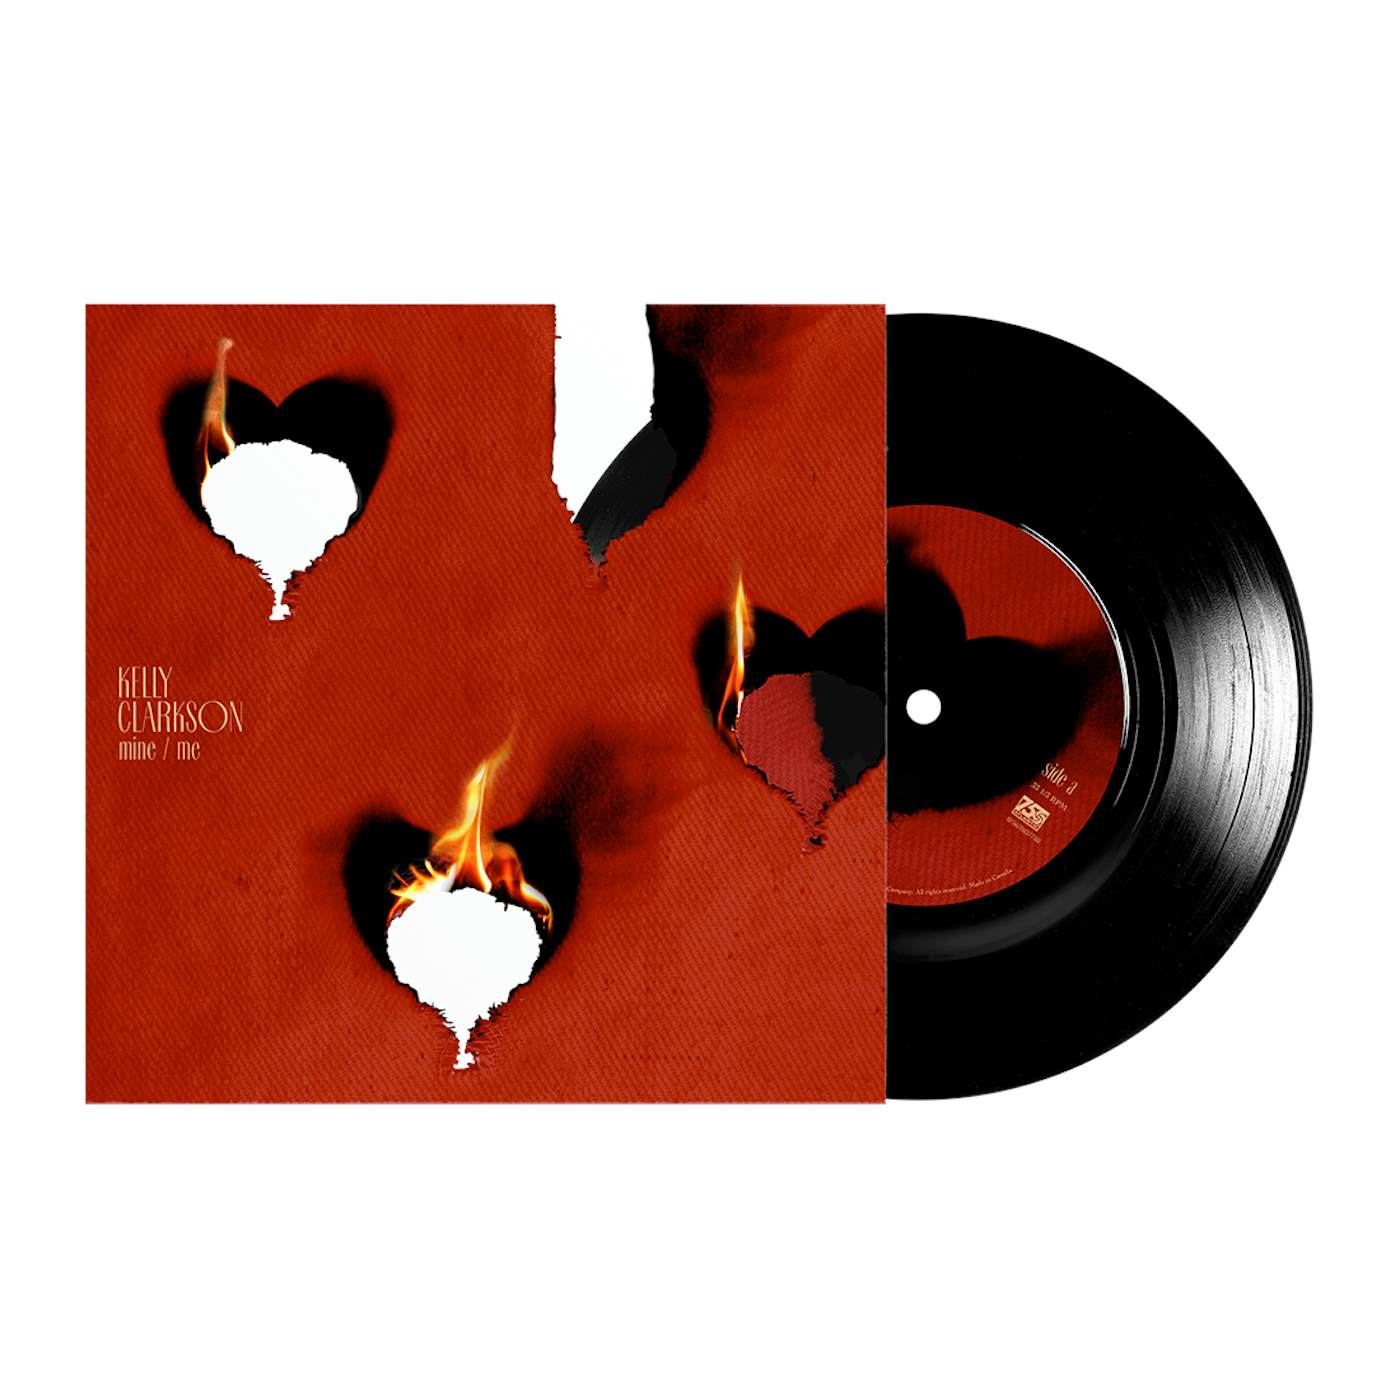 LADY GAGA – THE FAME MONSTER (PIC) – B Side Vinyl